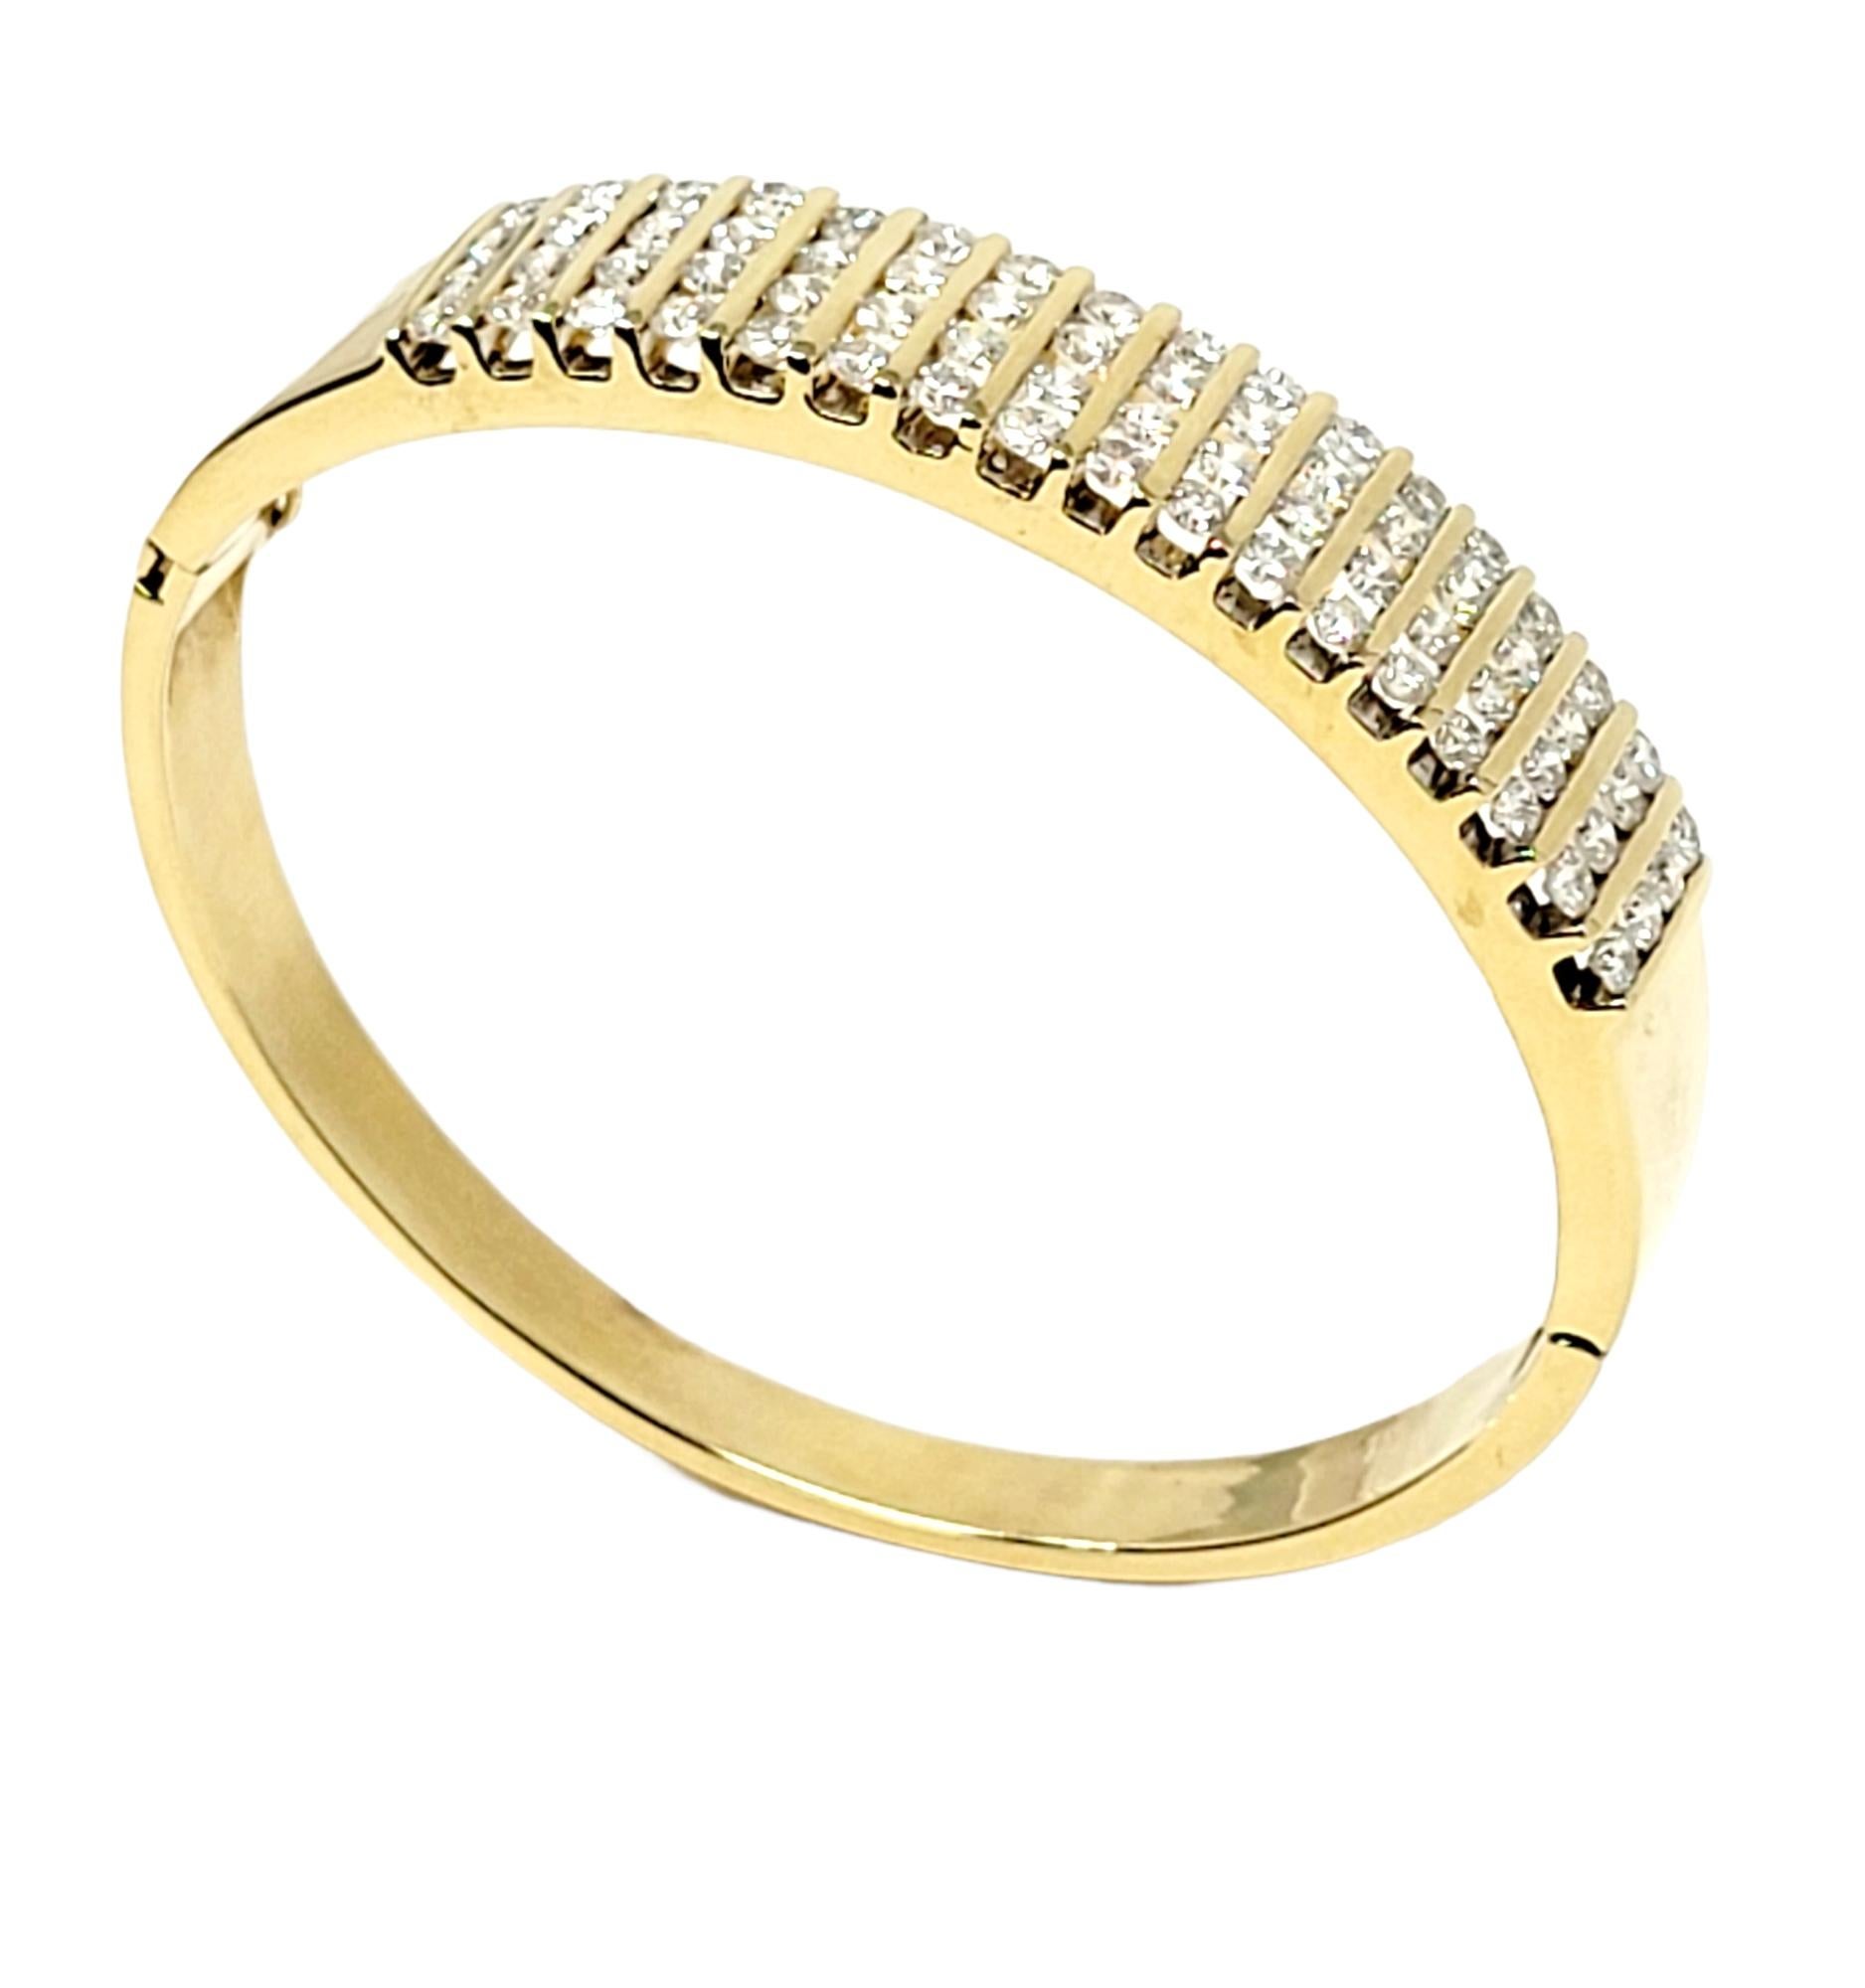 Channel Set Round Diamond Bangle Bracelet 5.50 Carats Total 14 Karat Yellow Gold For Sale 5